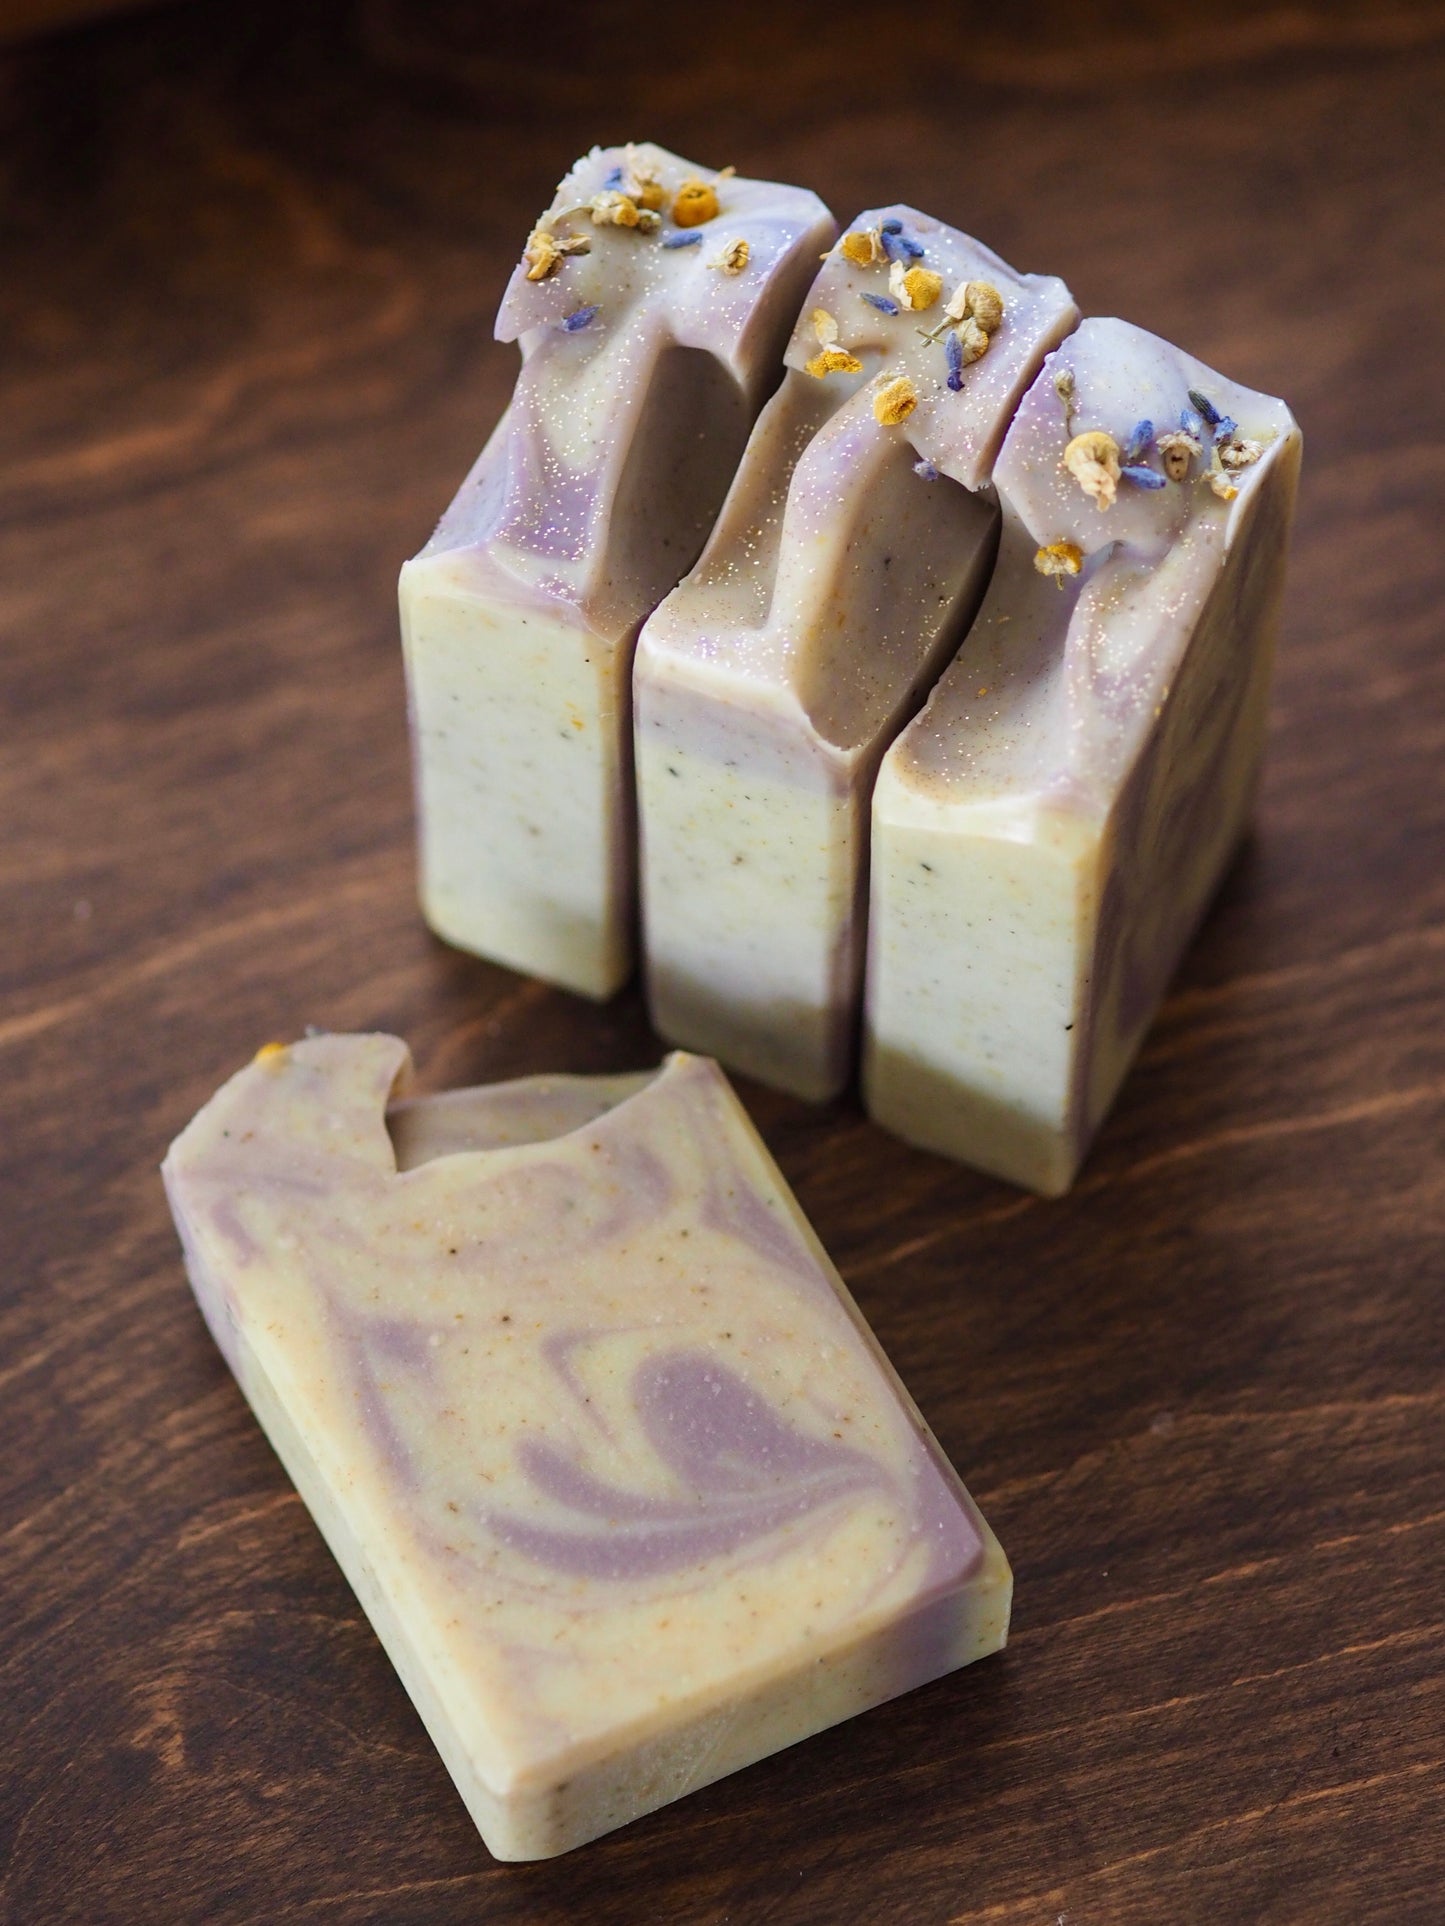 Chamomile Lavender - Artisan Natural Soap